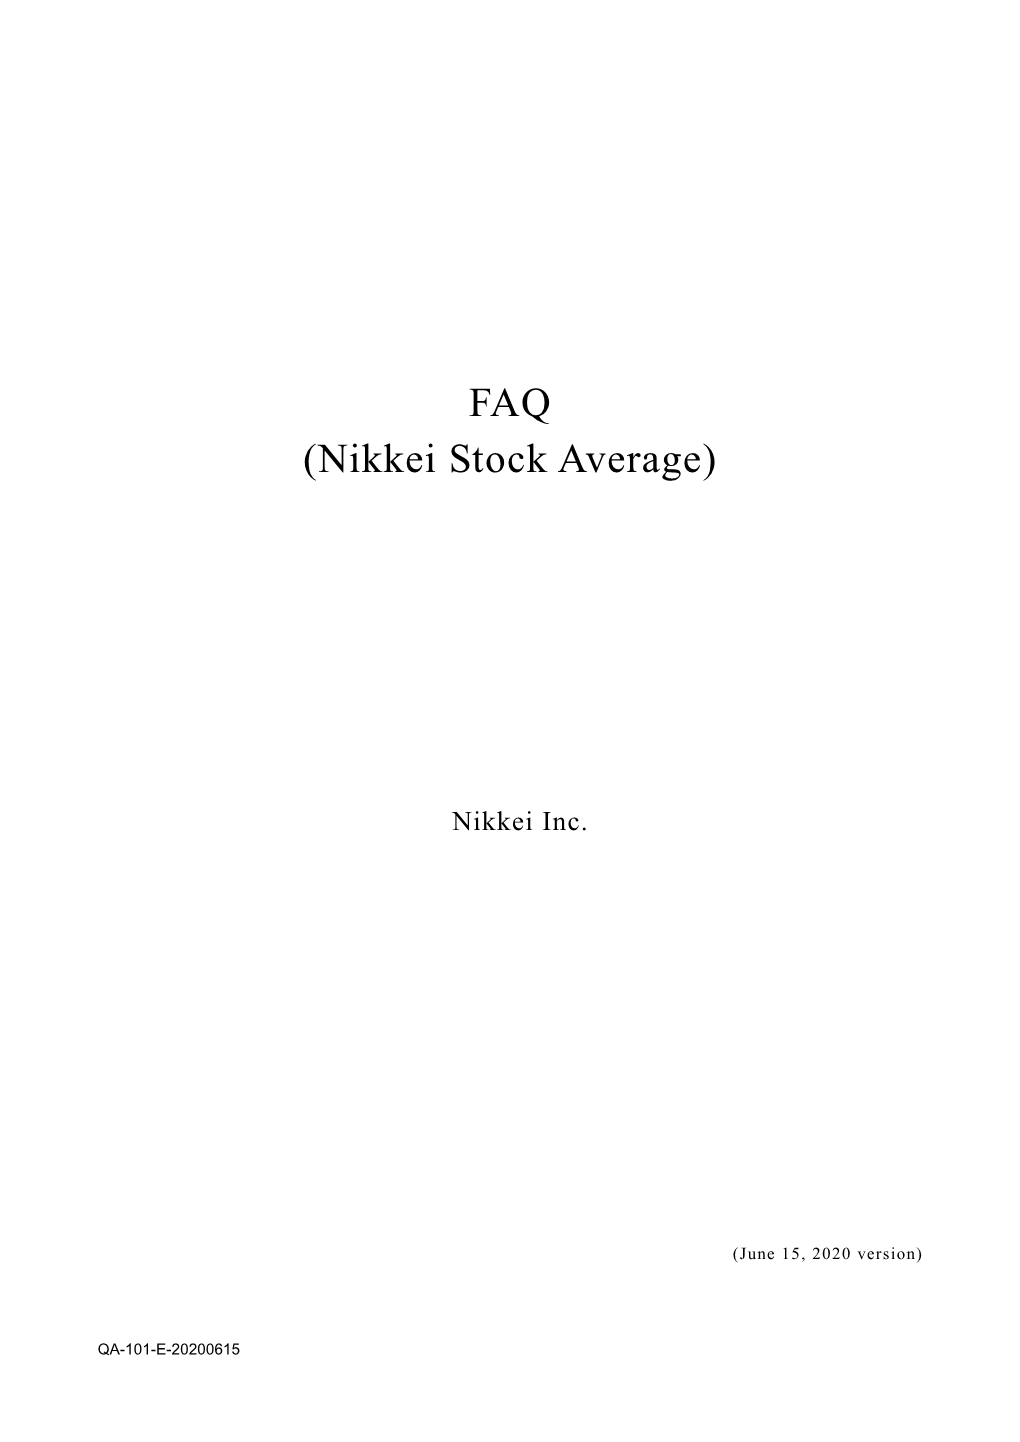 FAQ (Nikkei Stock Average)